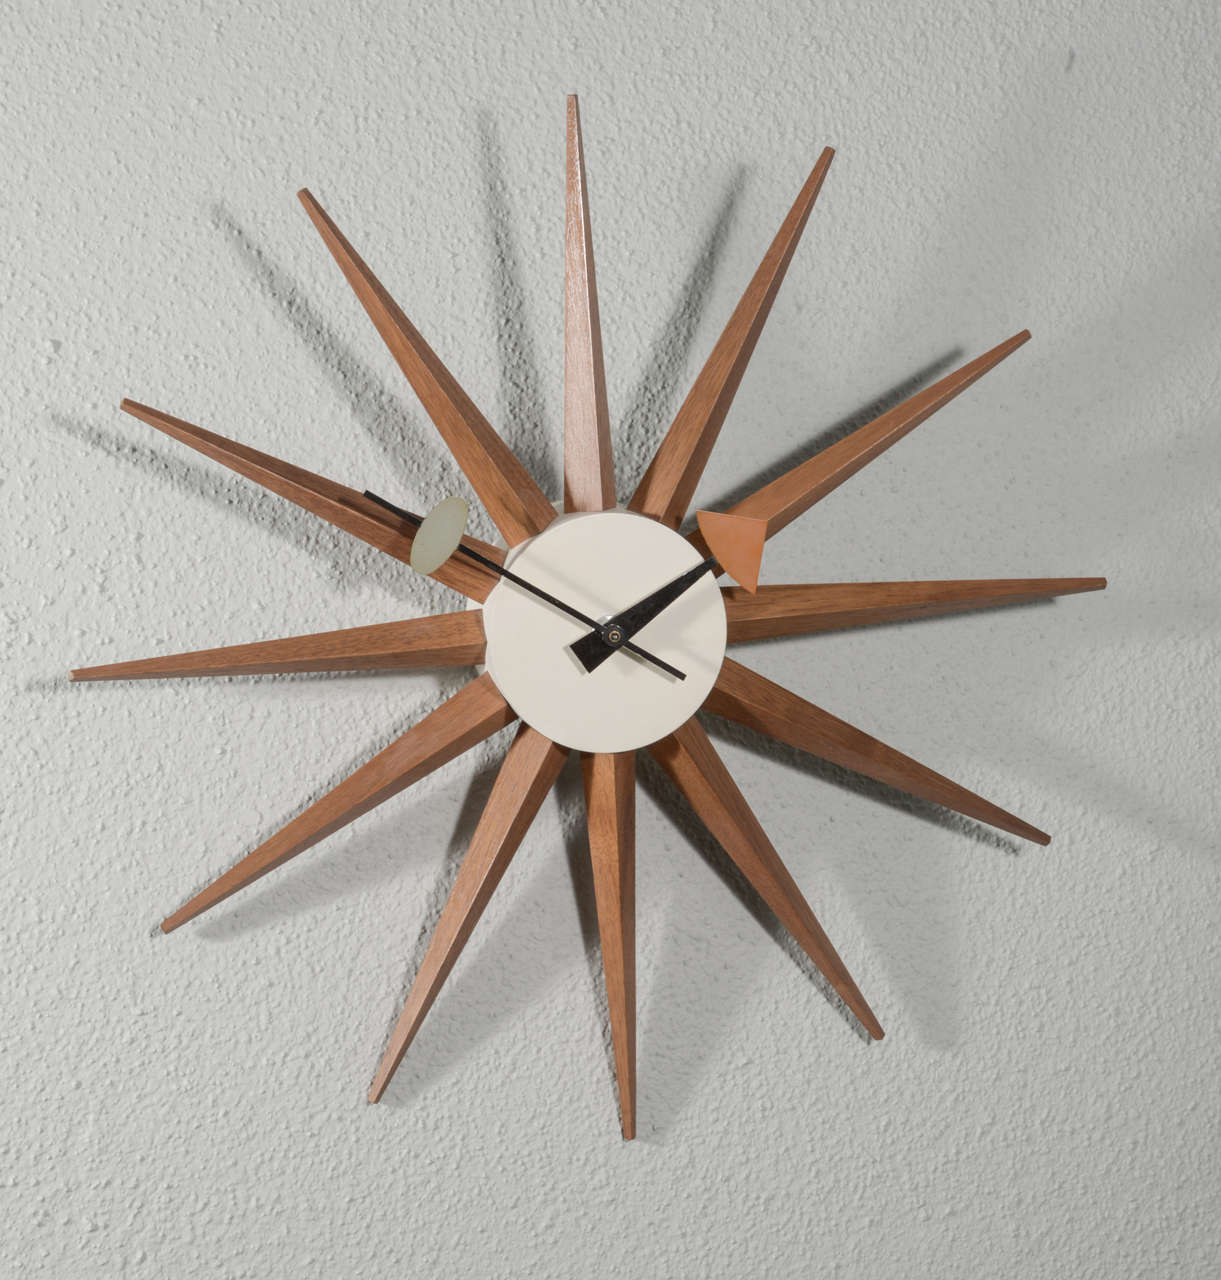 George Nelson spike clock by Howard Miller c. 1952 model 2202 in walnut and enameled metal.